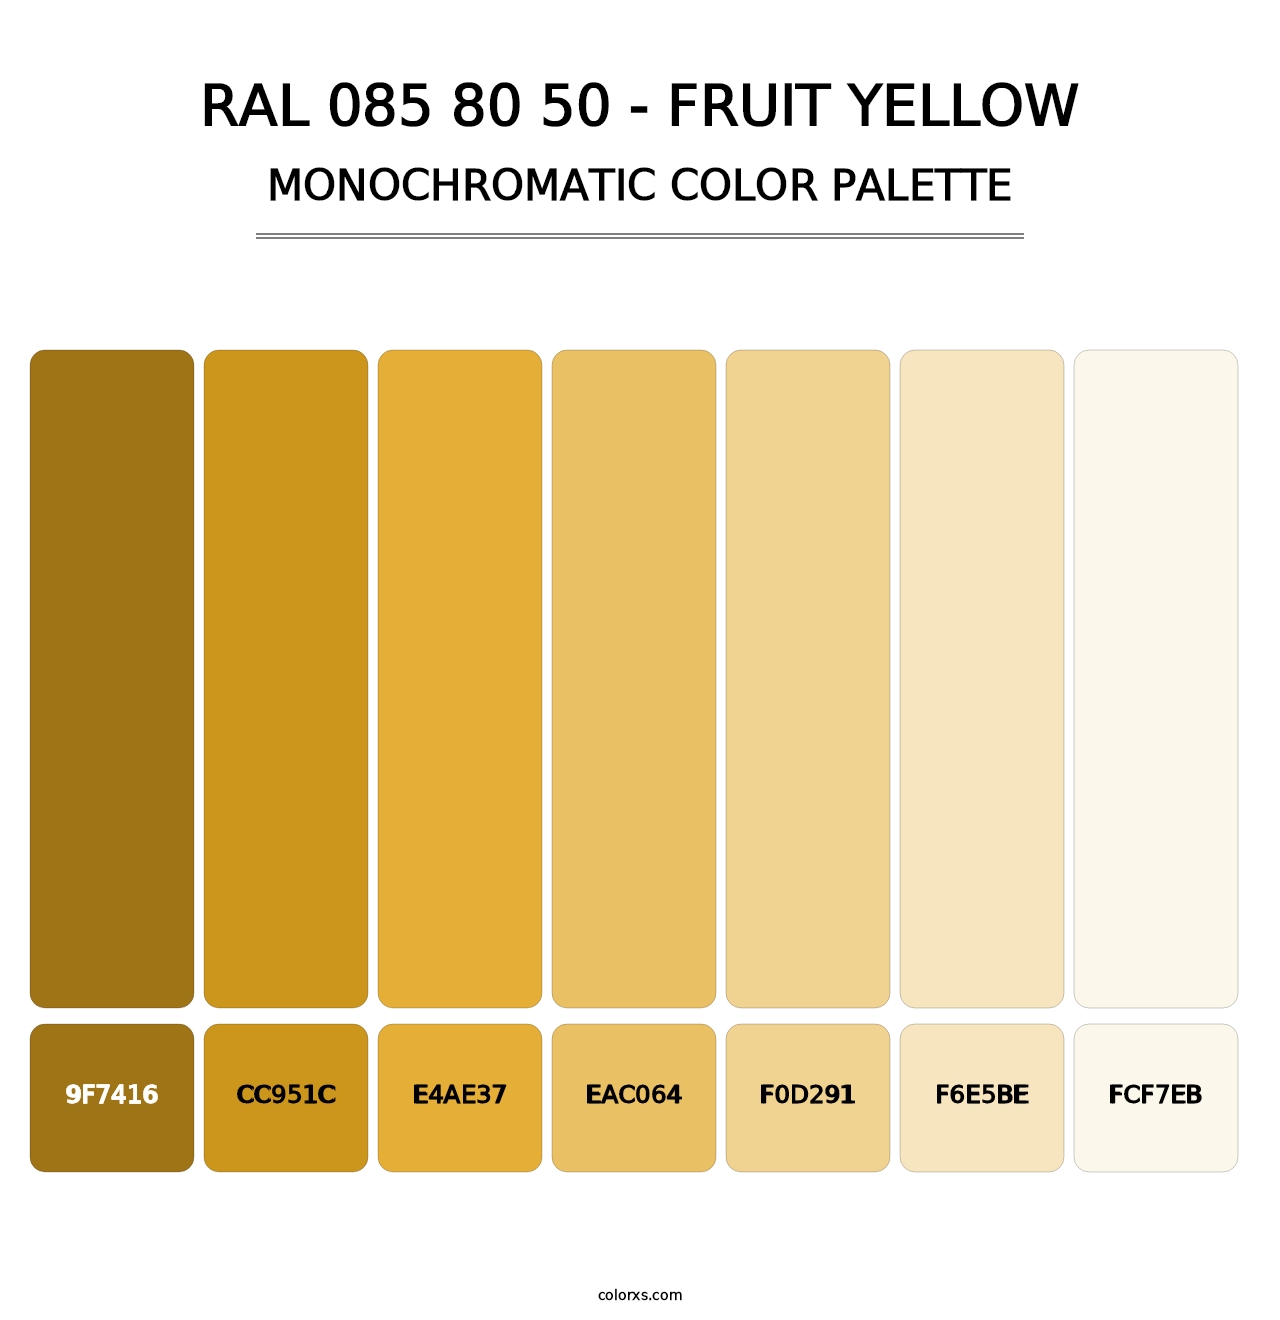 RAL 085 80 50 - Fruit Yellow - Monochromatic Color Palette